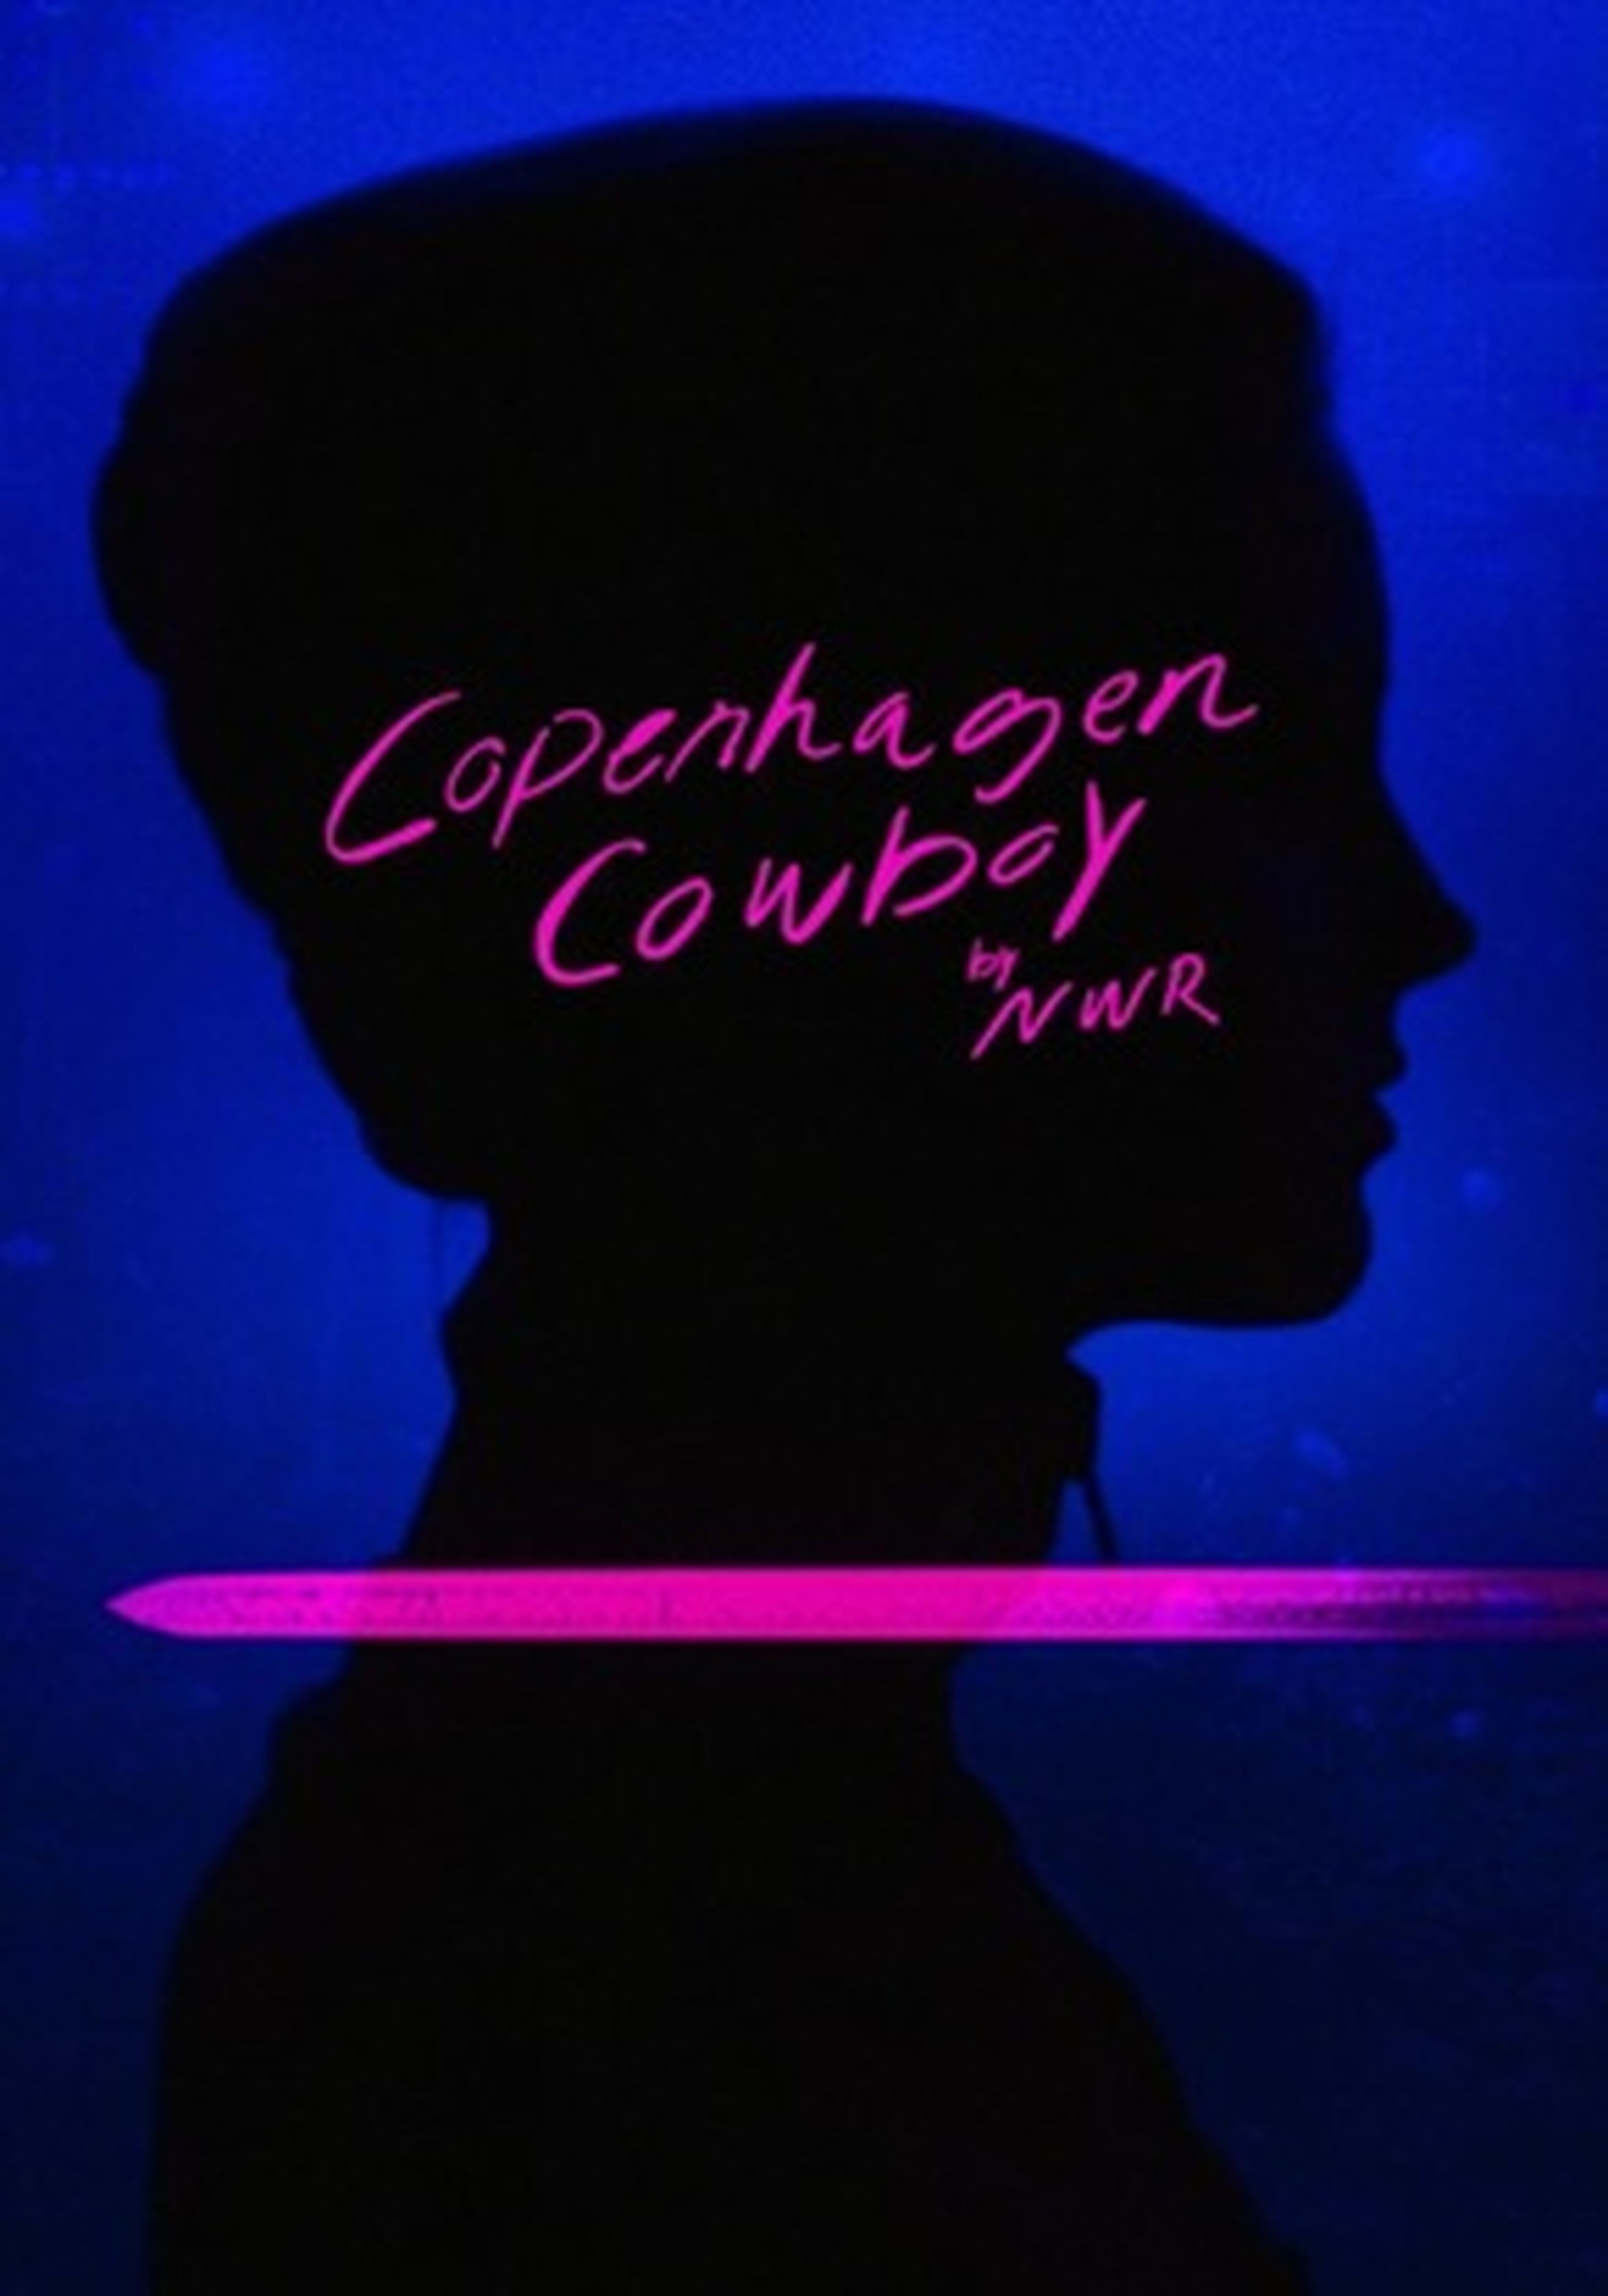 Copenhagen Cowboy cartel